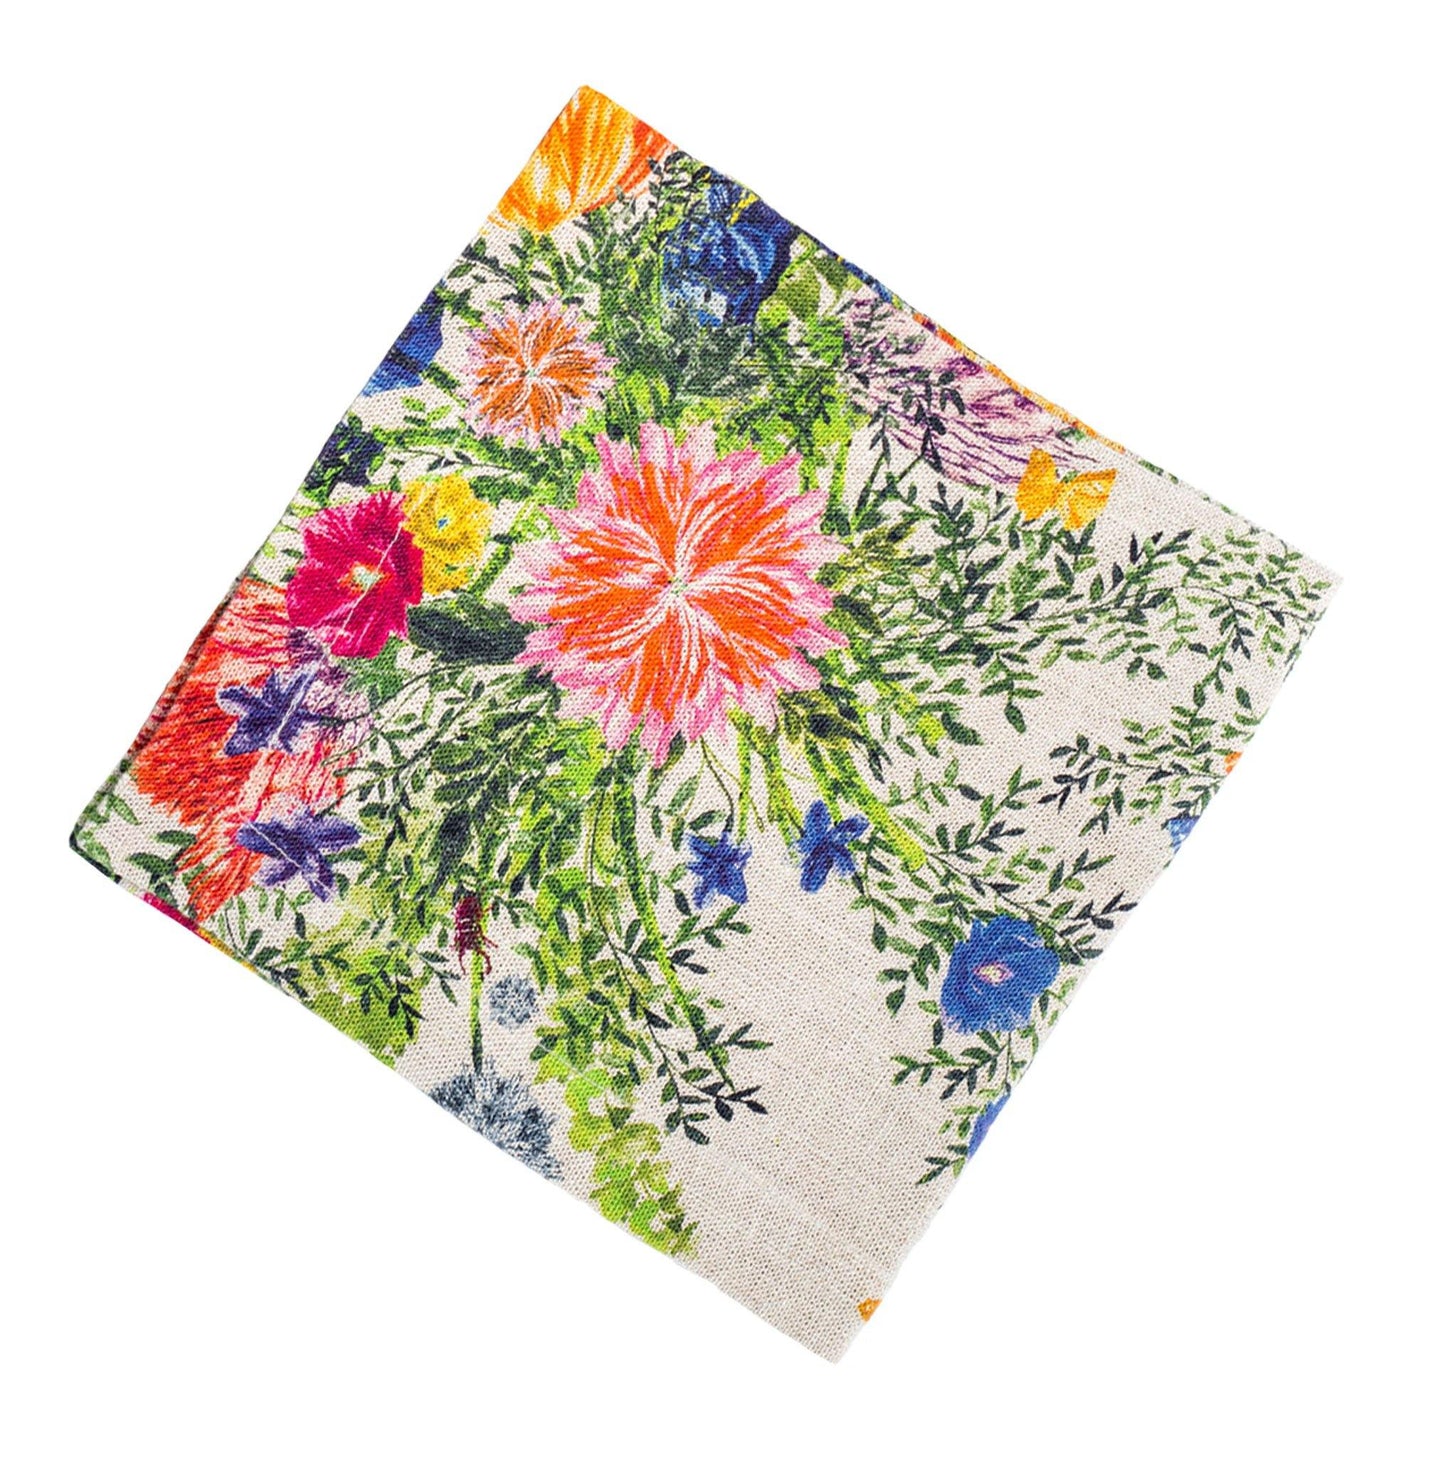 Flower illustrated printed organic linen napkin.